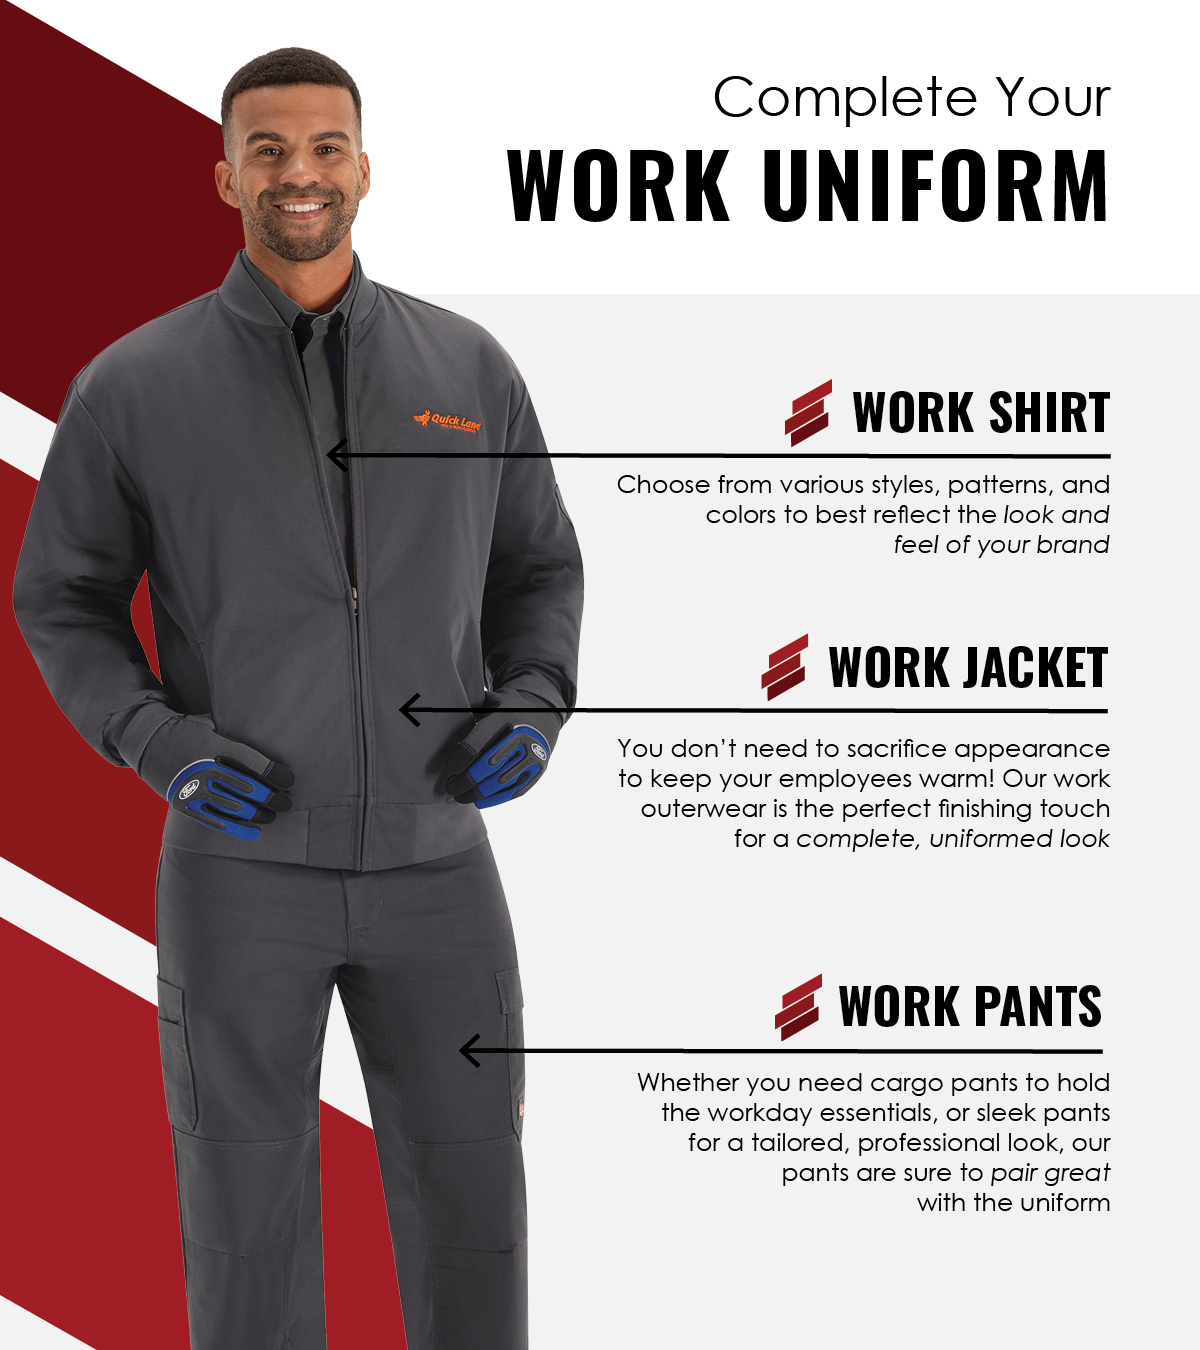 Complete Your Work Uniform